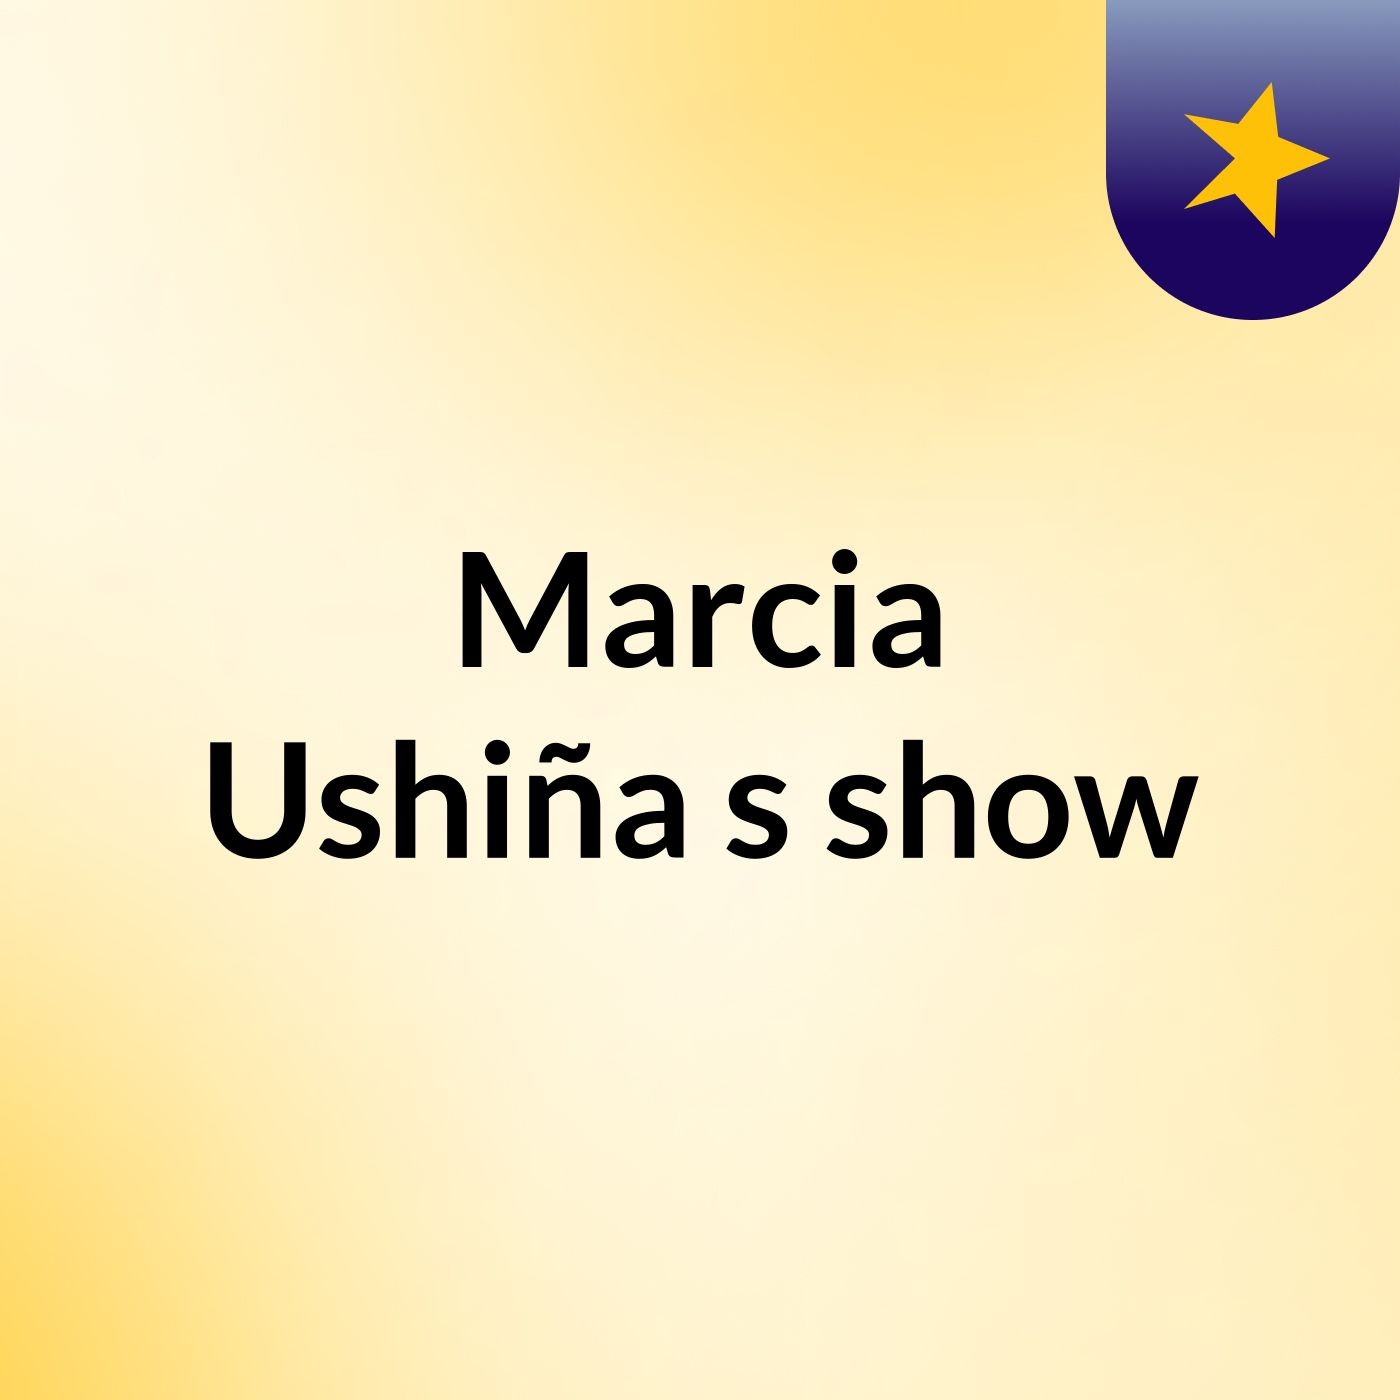 Marcia Ushiña's show